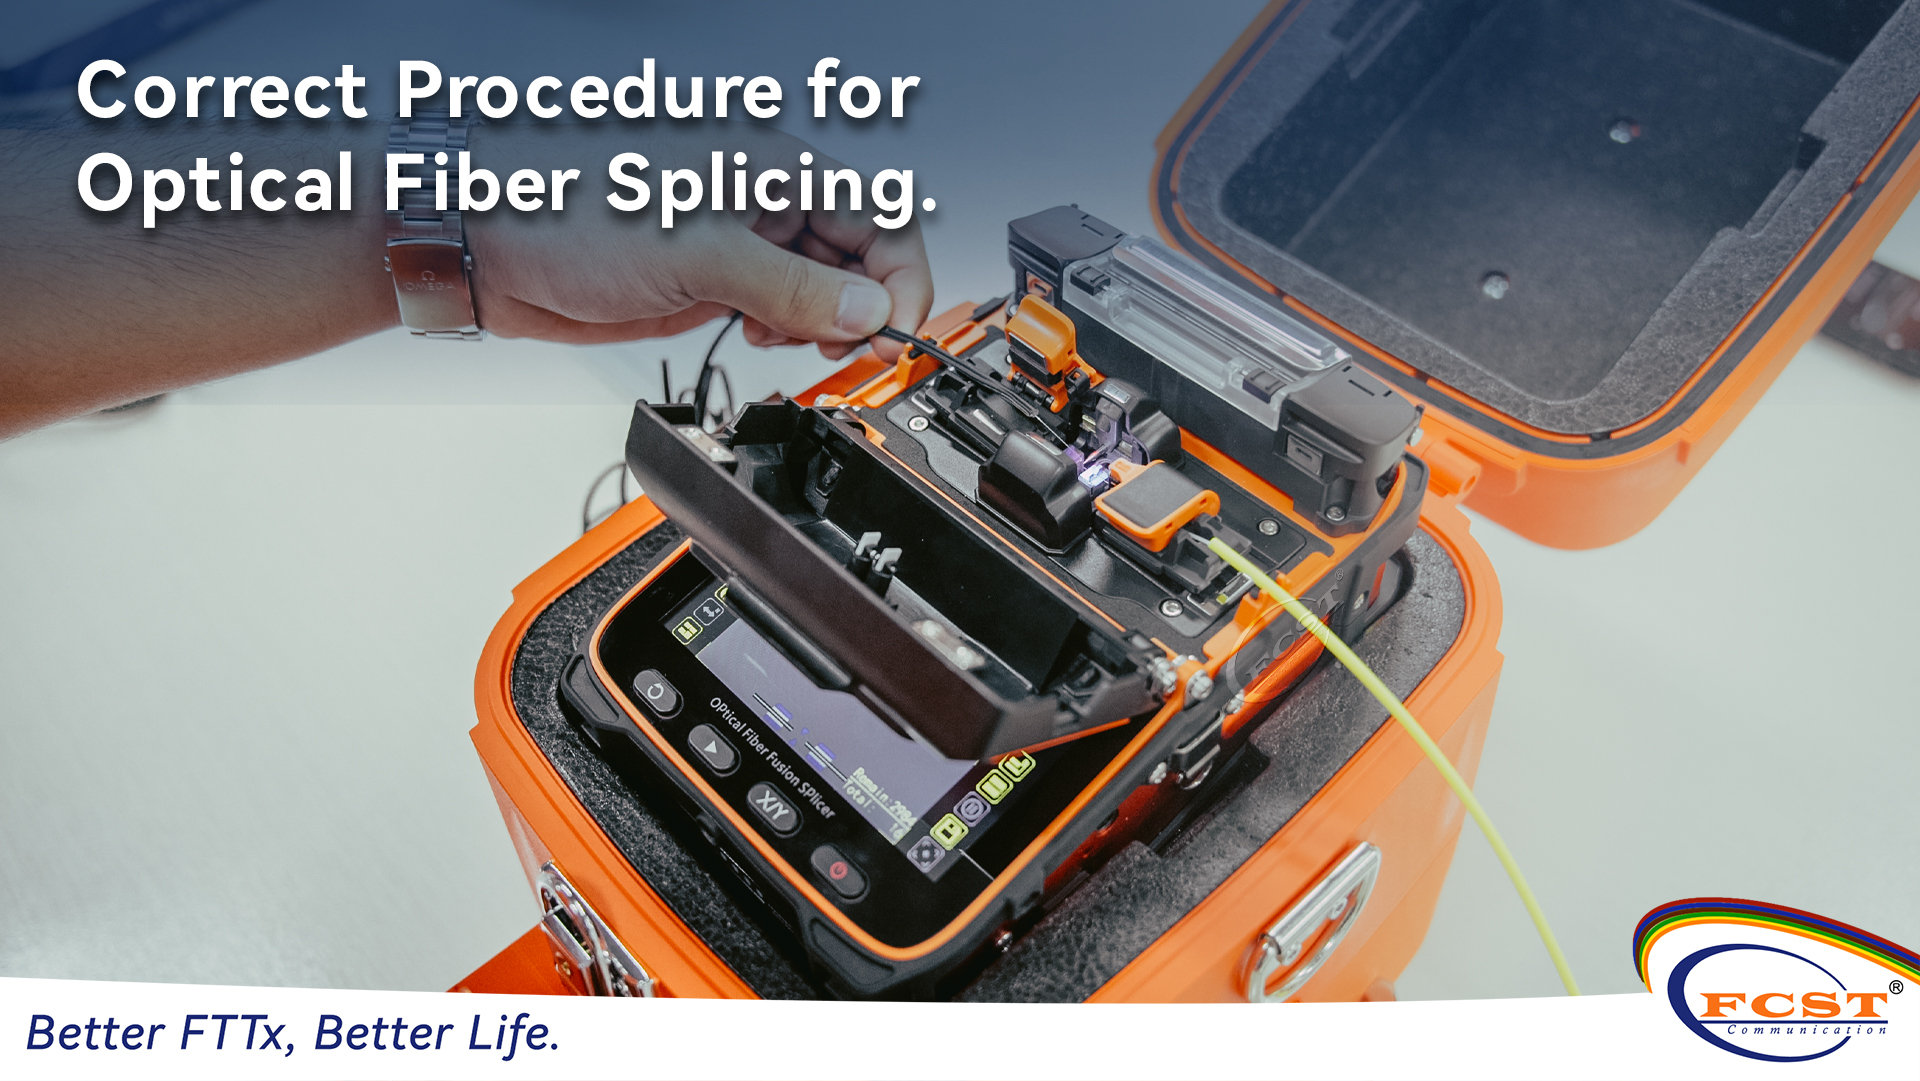 Procedimento correto para splicing de fibra óptica